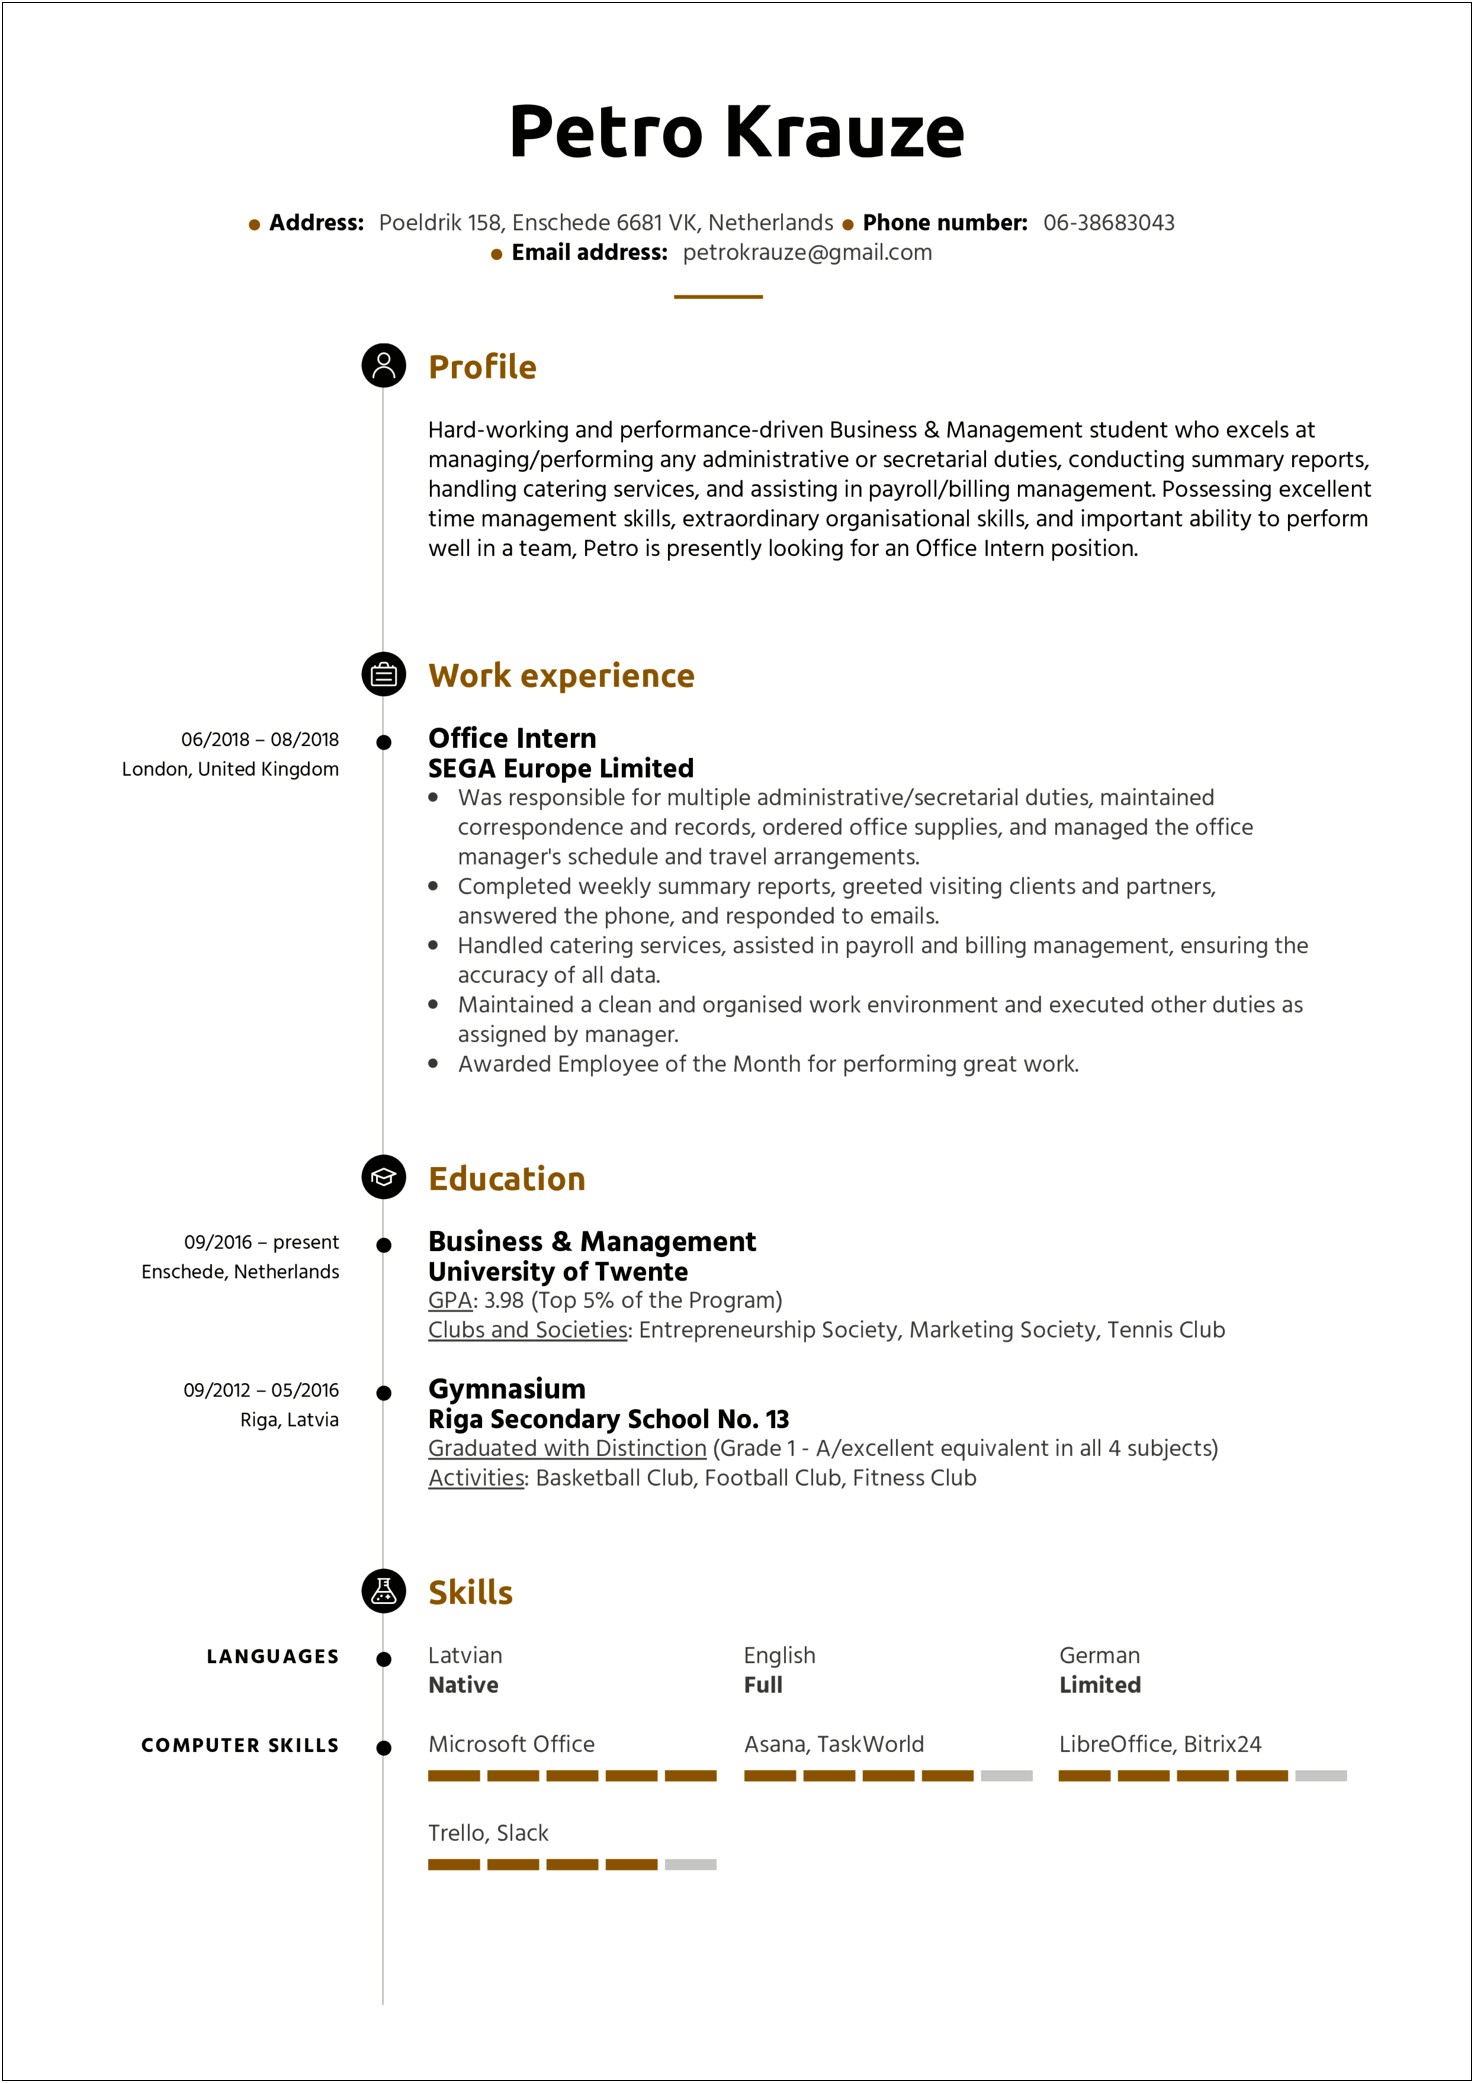 Sample Resume For An Internship Position